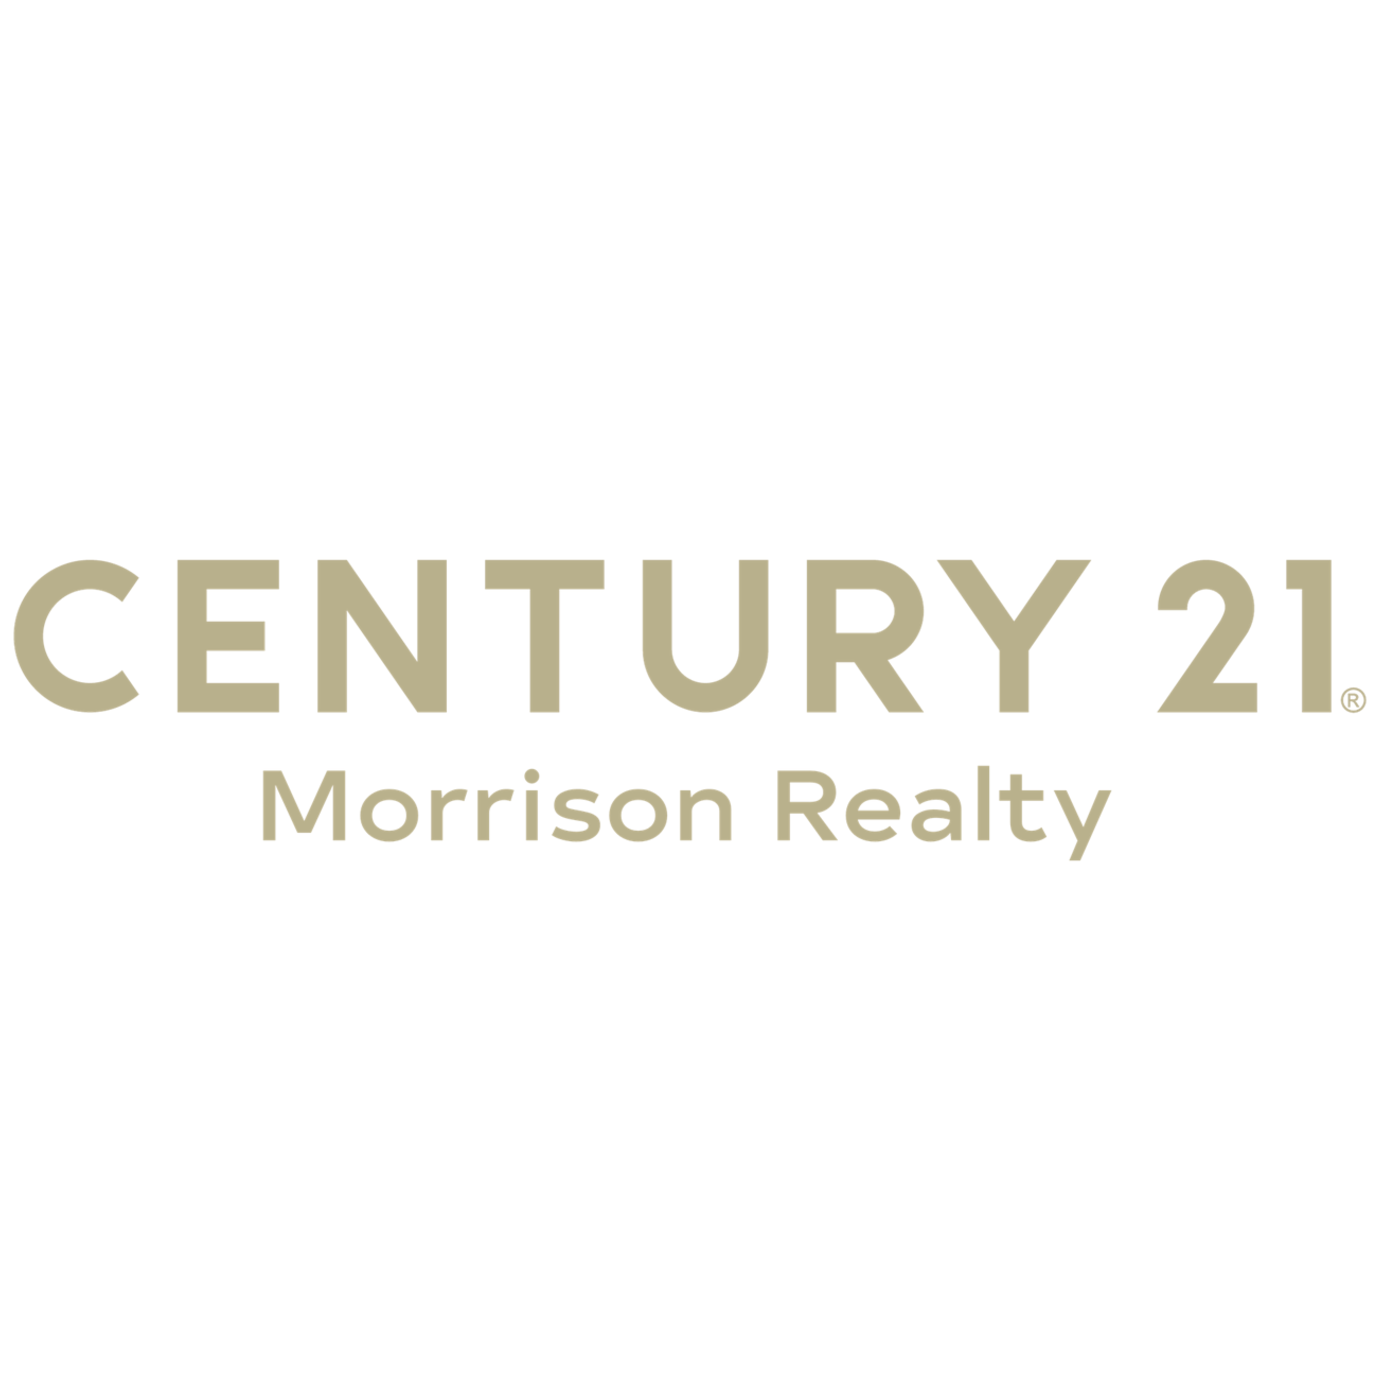 Chris Morris | Century 21 | Morrison Realty